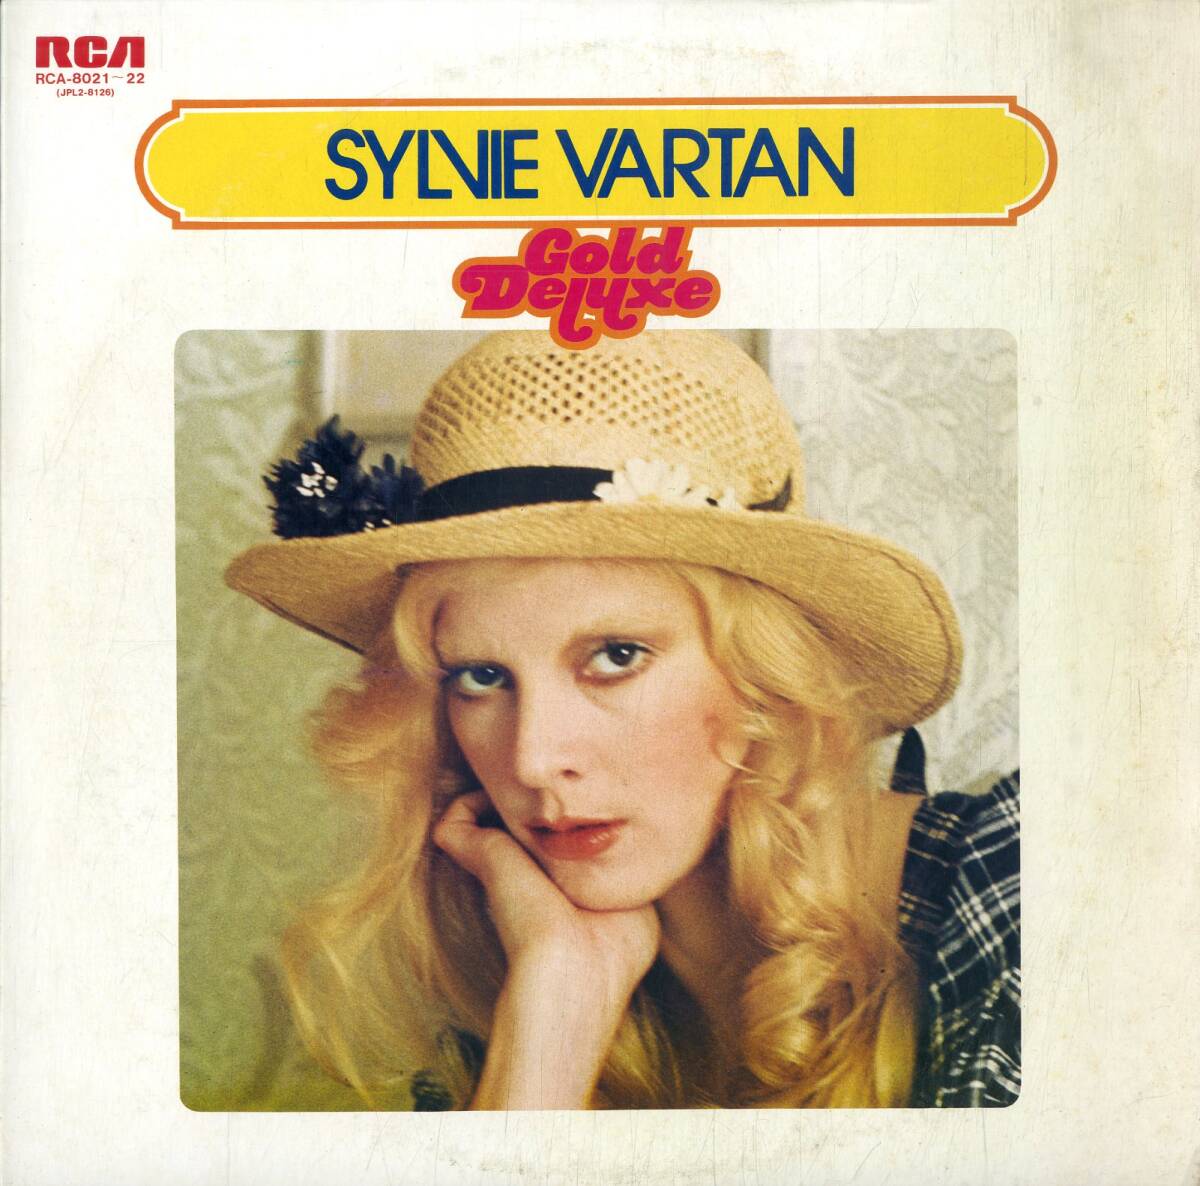 A00570202/LP2枚組/シルヴィ・バルタン(SYLVIE VARTAN)「Gold Deluxe (1974年・RCA-8021～22・シャンソン)」_画像1